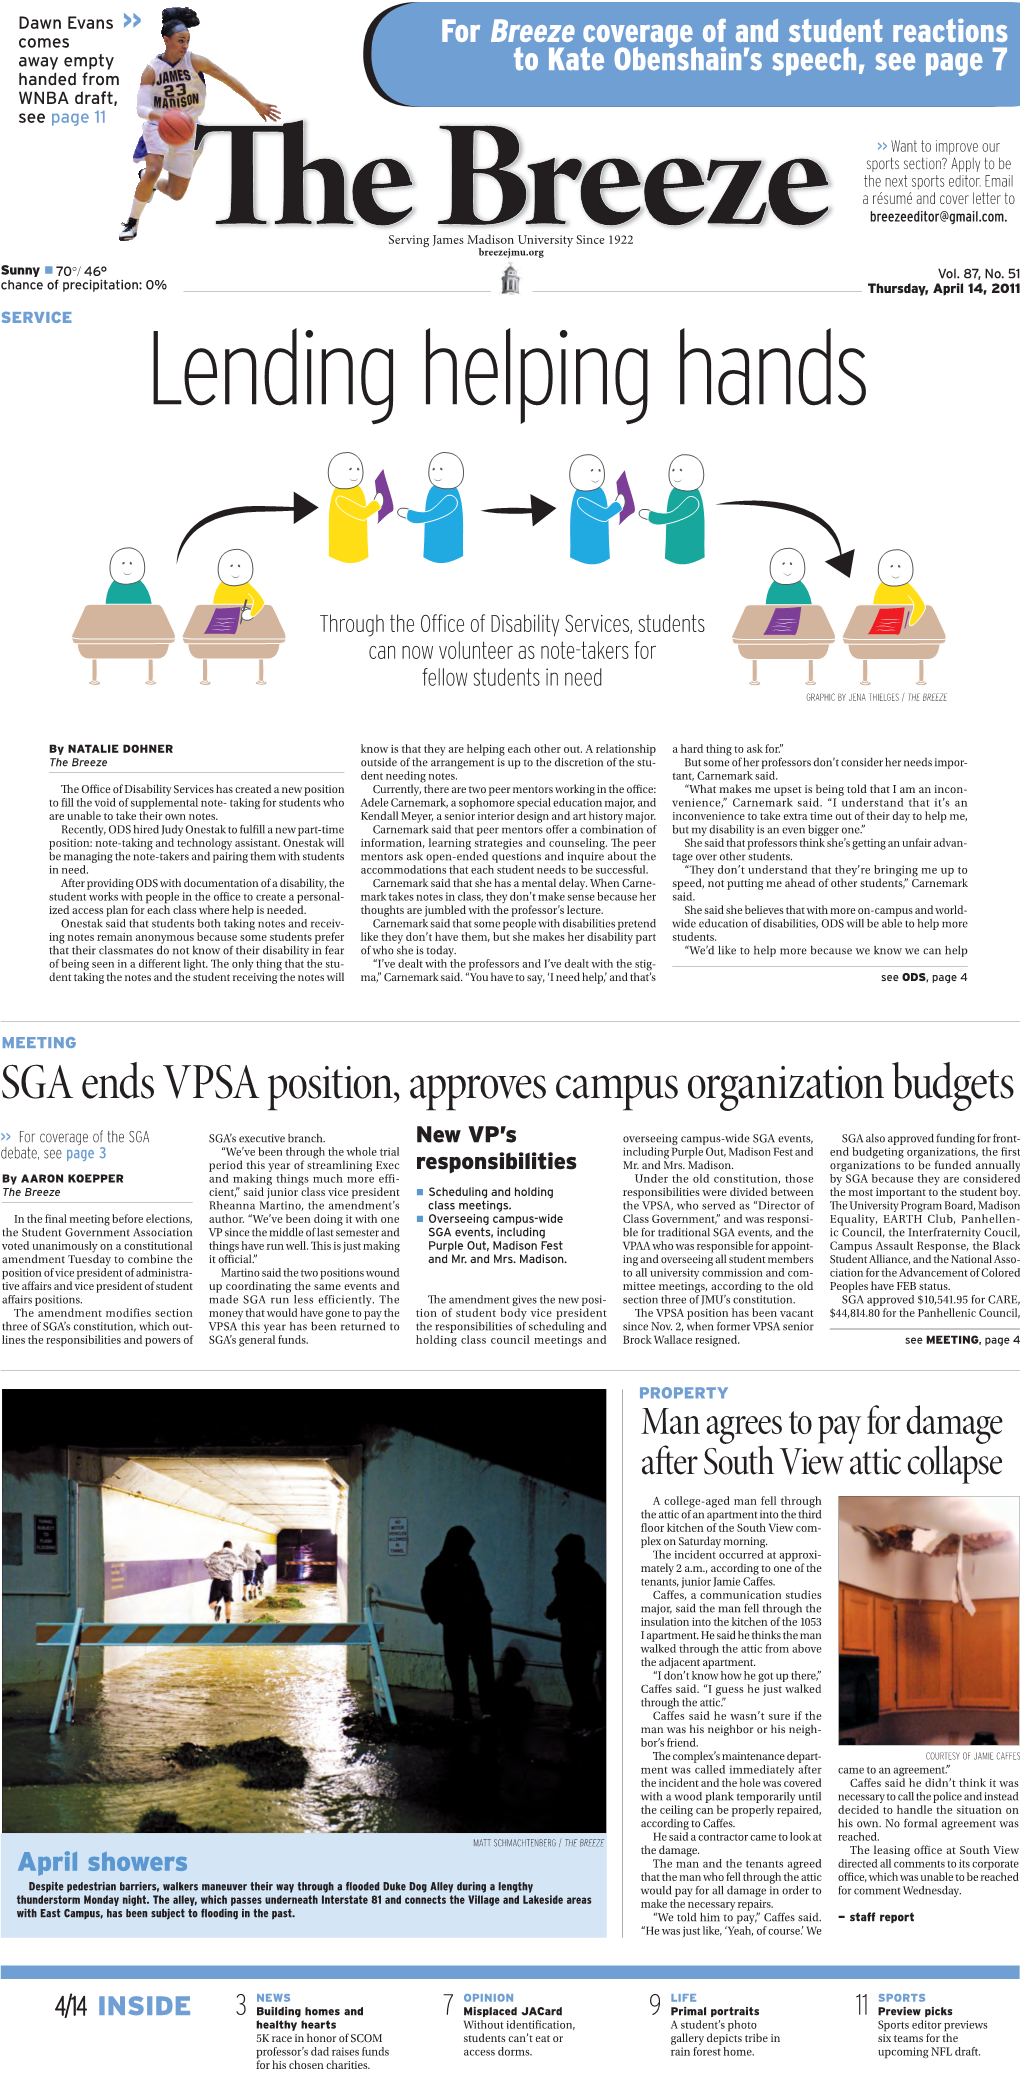 SGA Ends VPSA Position, Approves Campus Organization Budgets